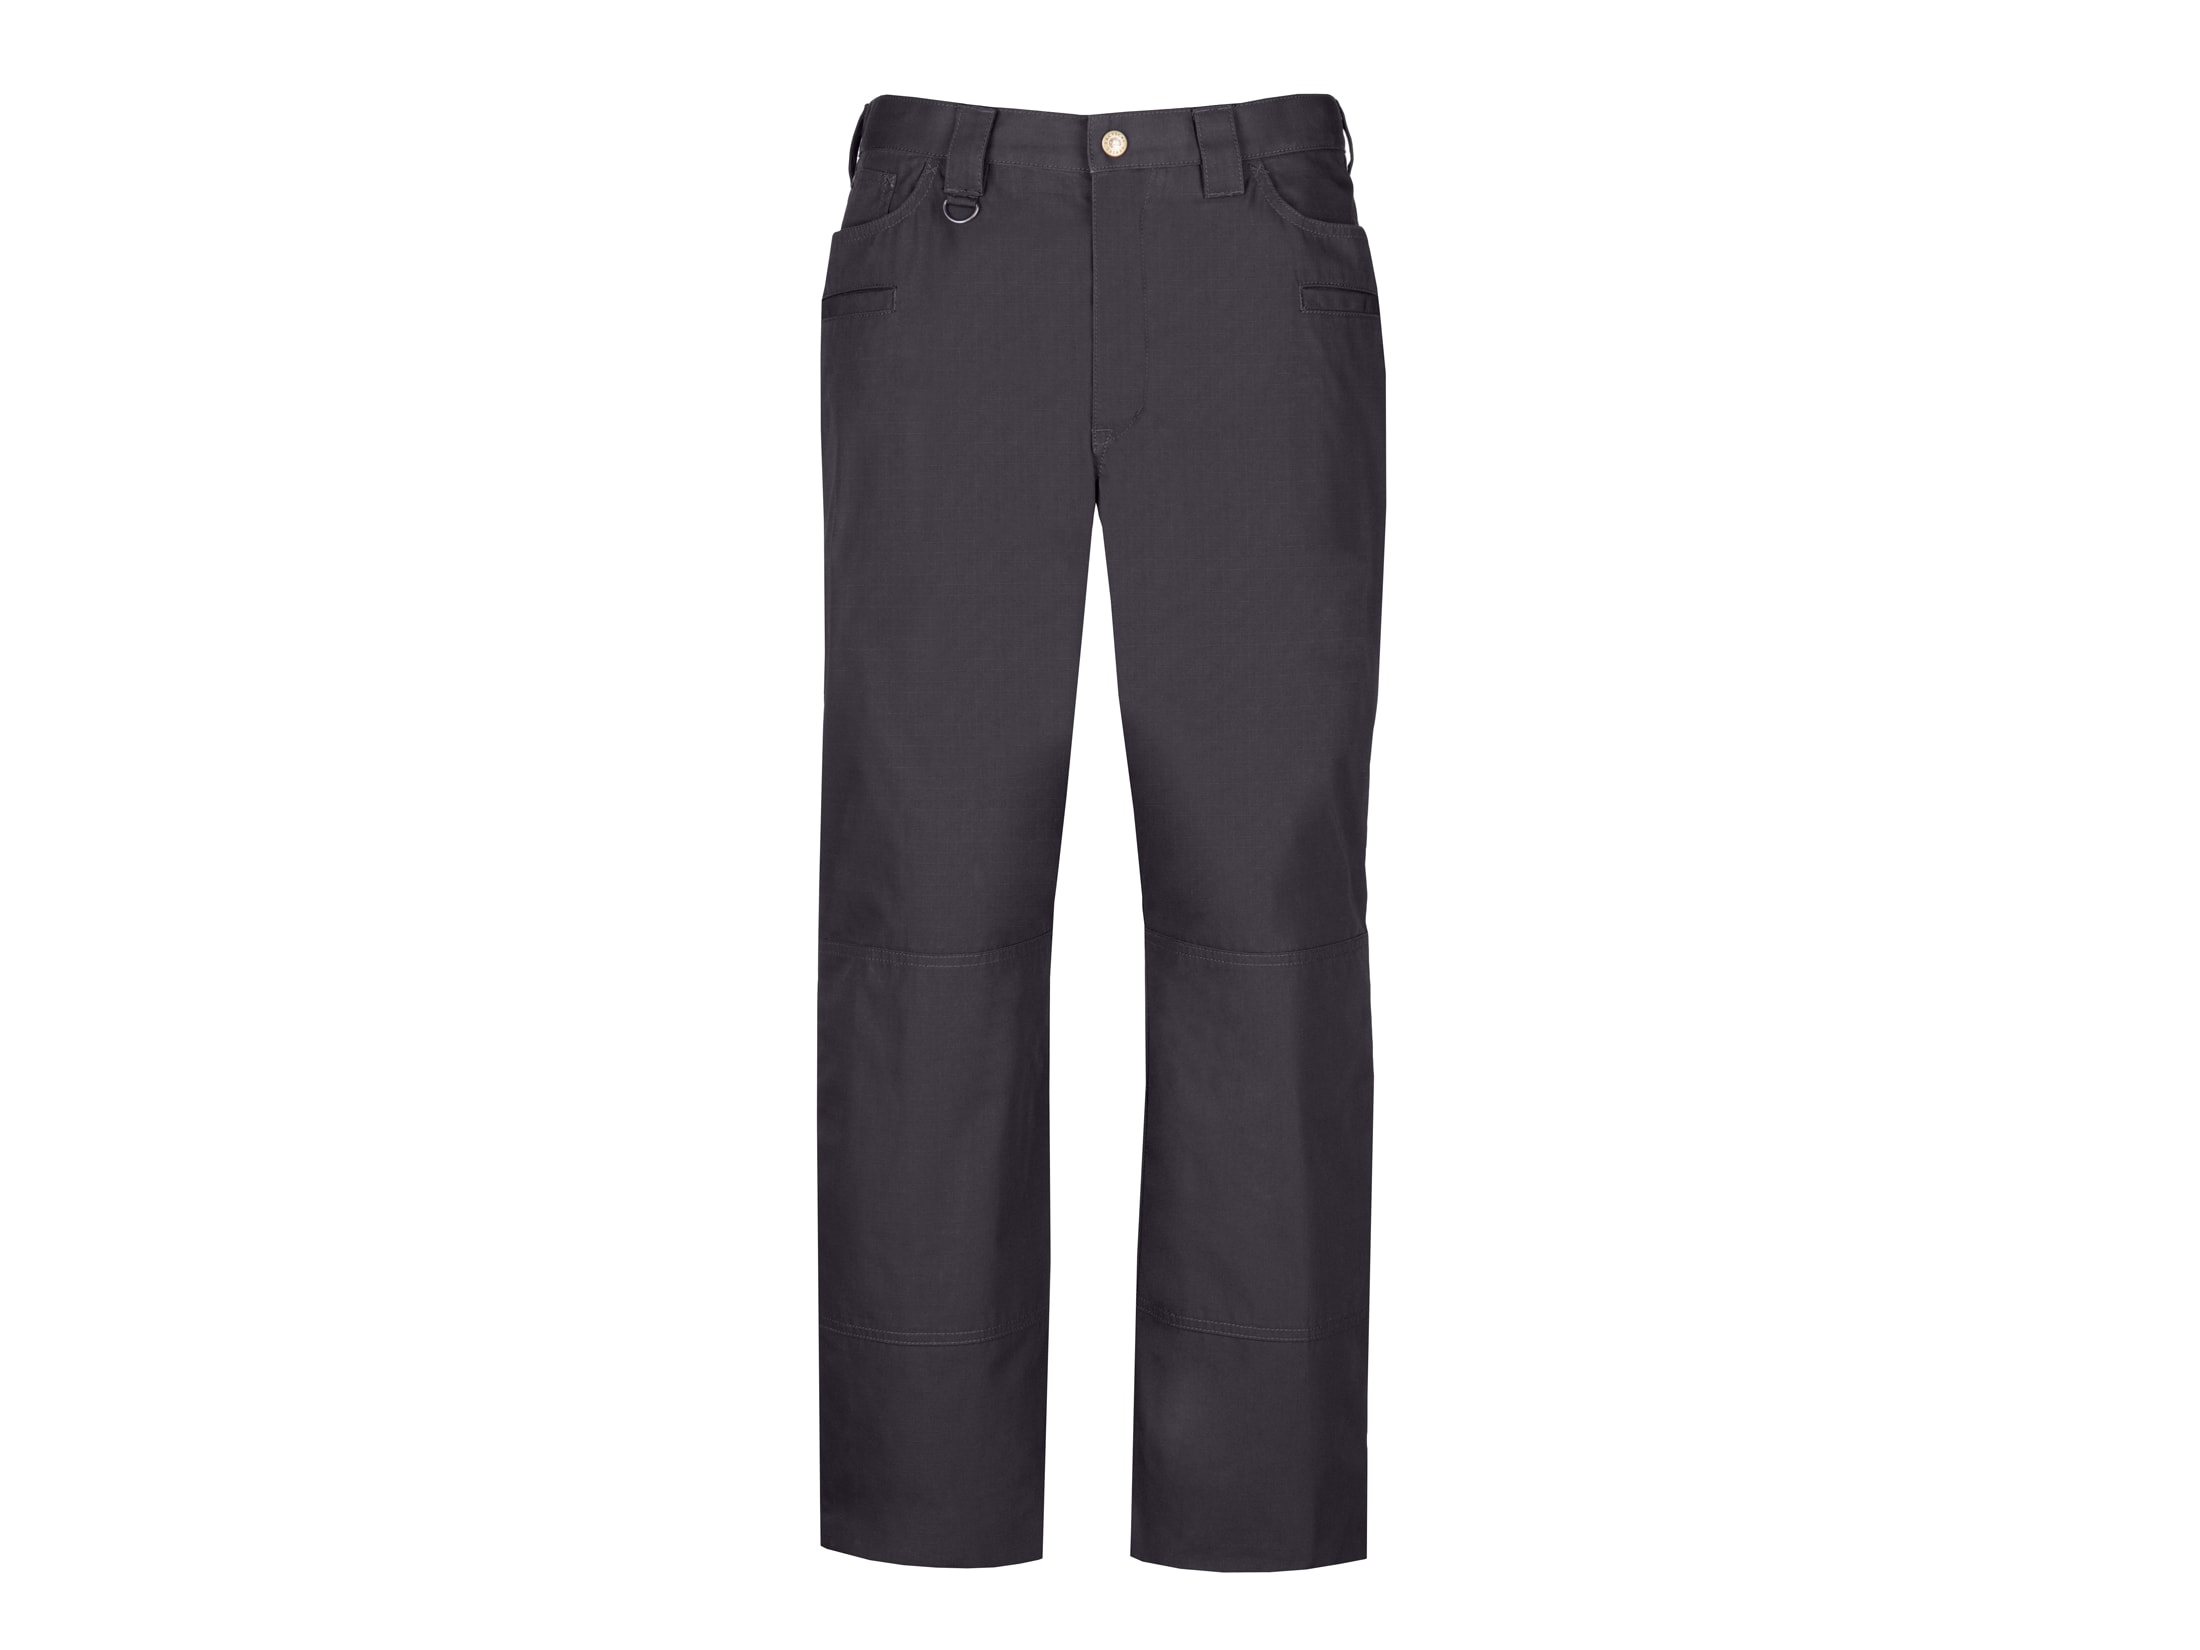 5.11 Men's Taclite Jean-Cut Pants Polyester/Cotton Charcoal 36 Waist